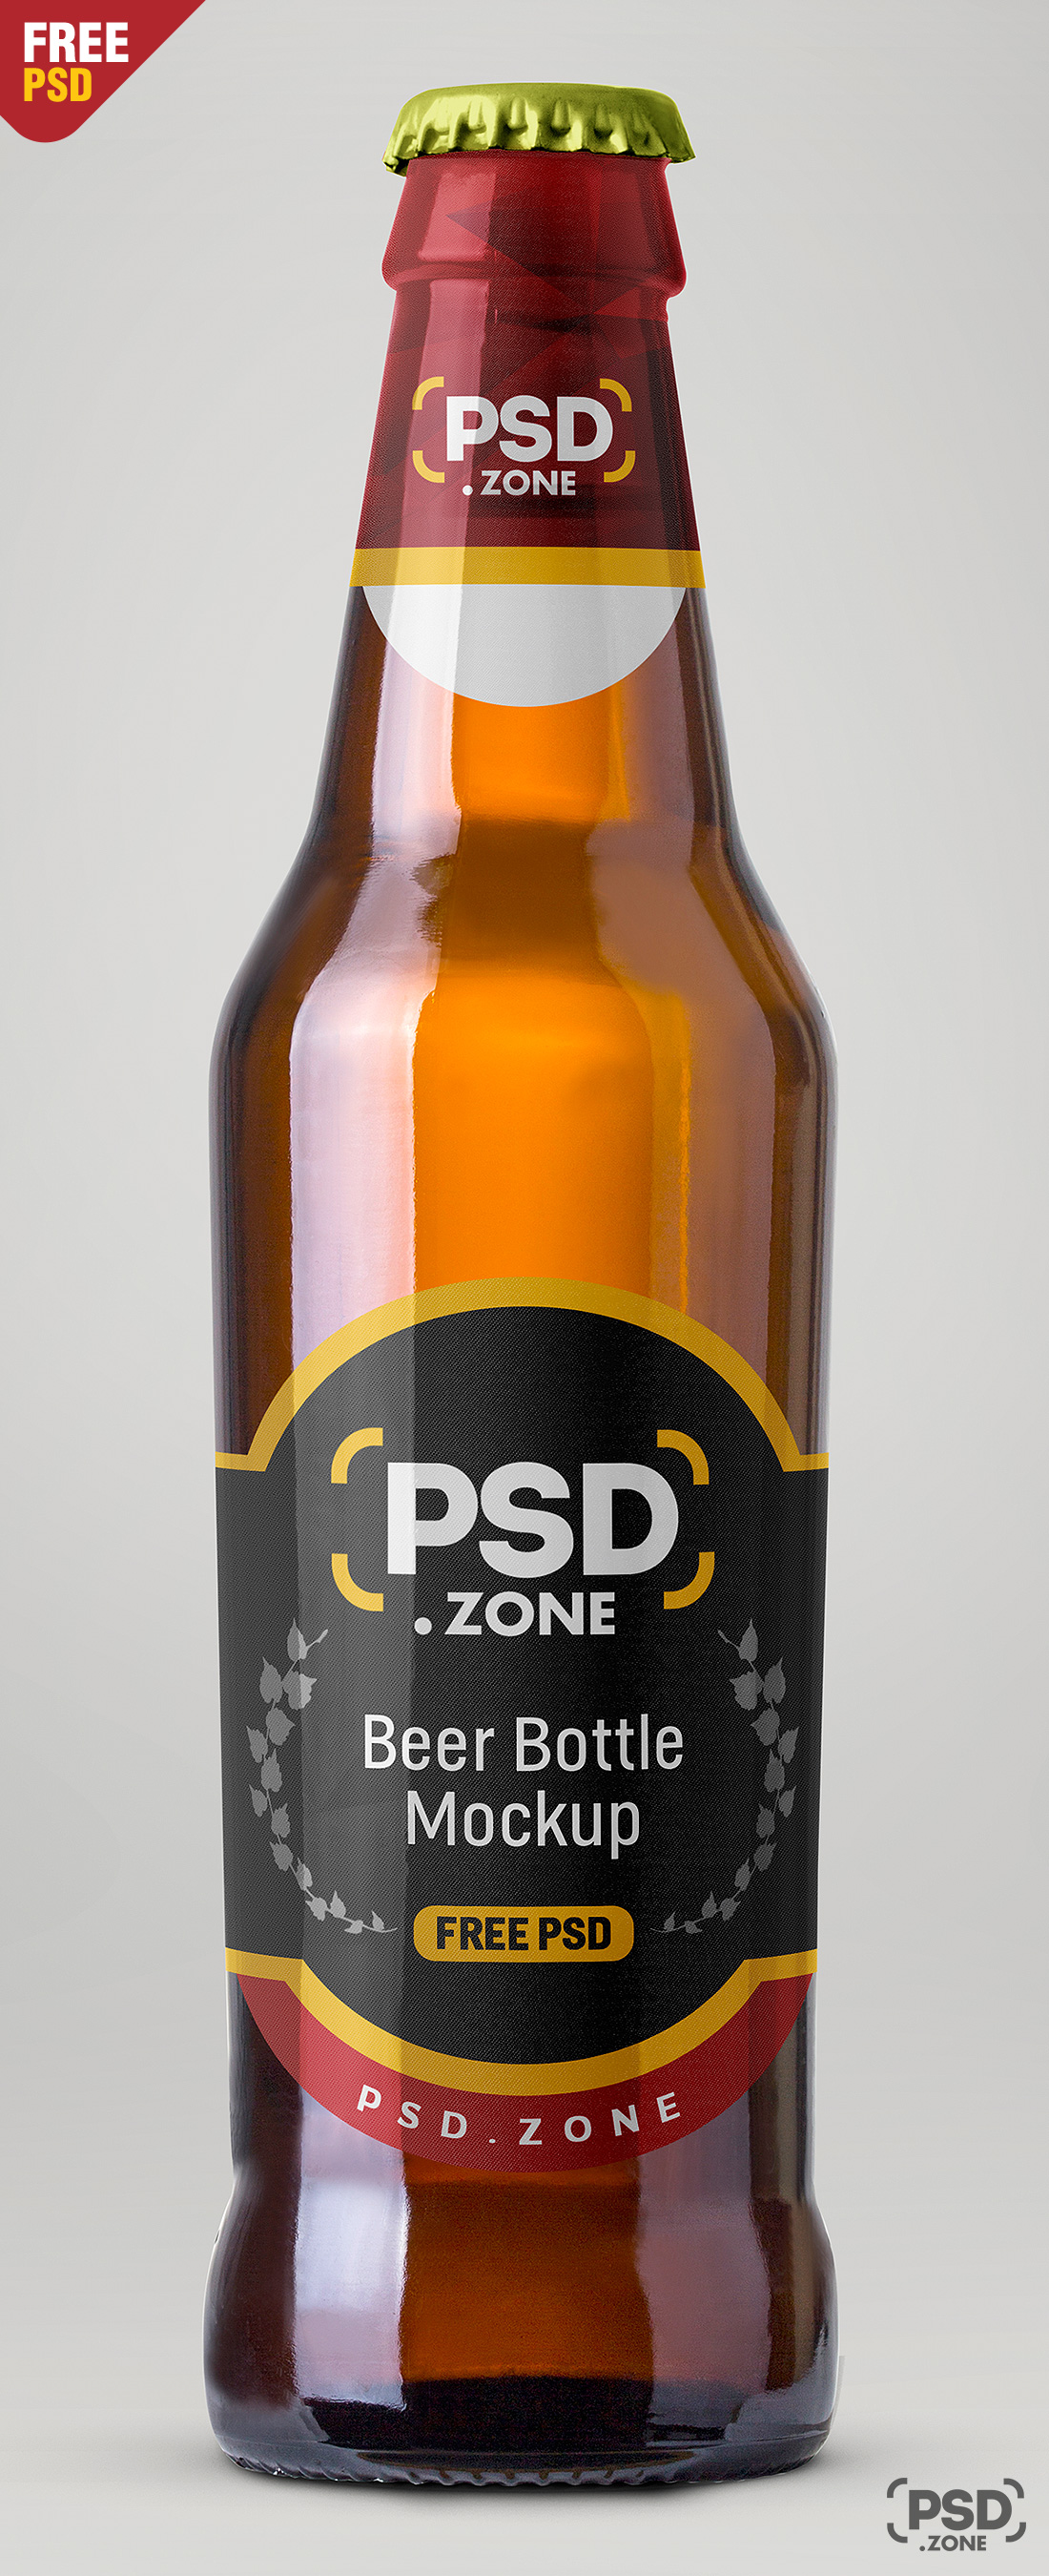 Beer Bottle Mockup Free PSD - PSD Zone